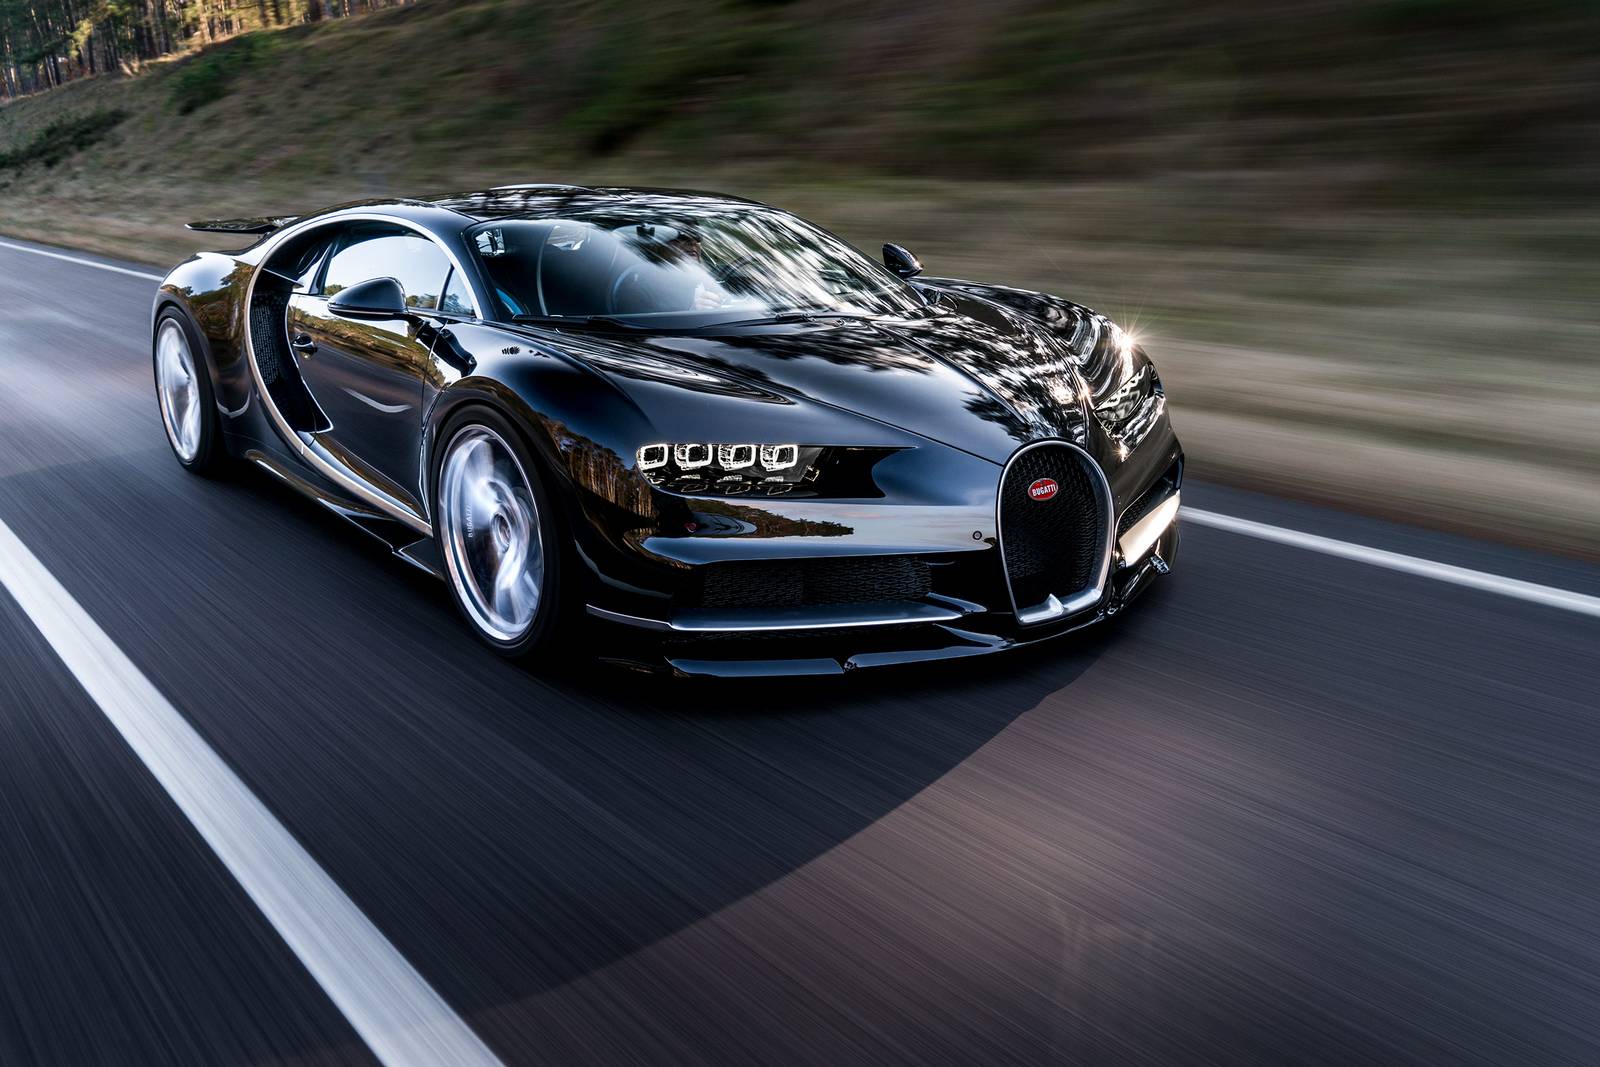 Bugatti Chiron Blue Wallpaper Free Price Engine Msrp Review